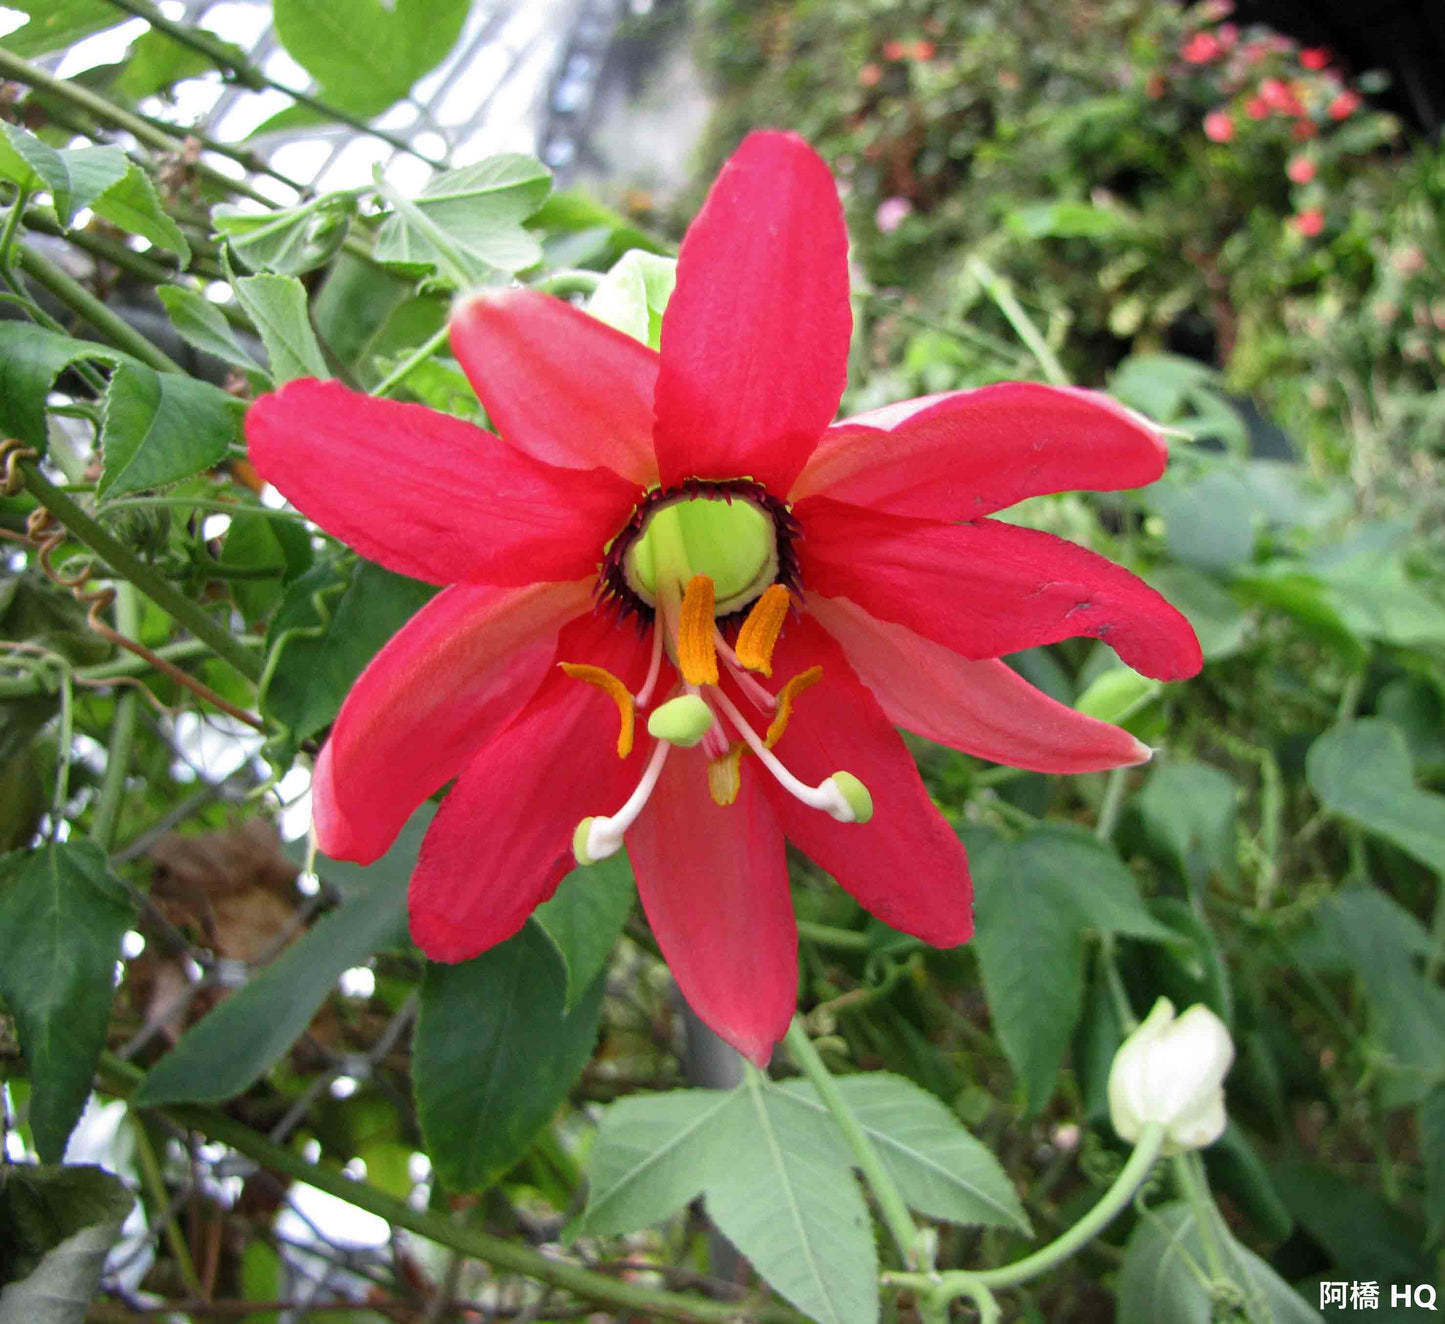 Passiflora Manicata - 5 Fresh Seeds - Red Passion Flower - Stunning Scarlet Flowers - 2022